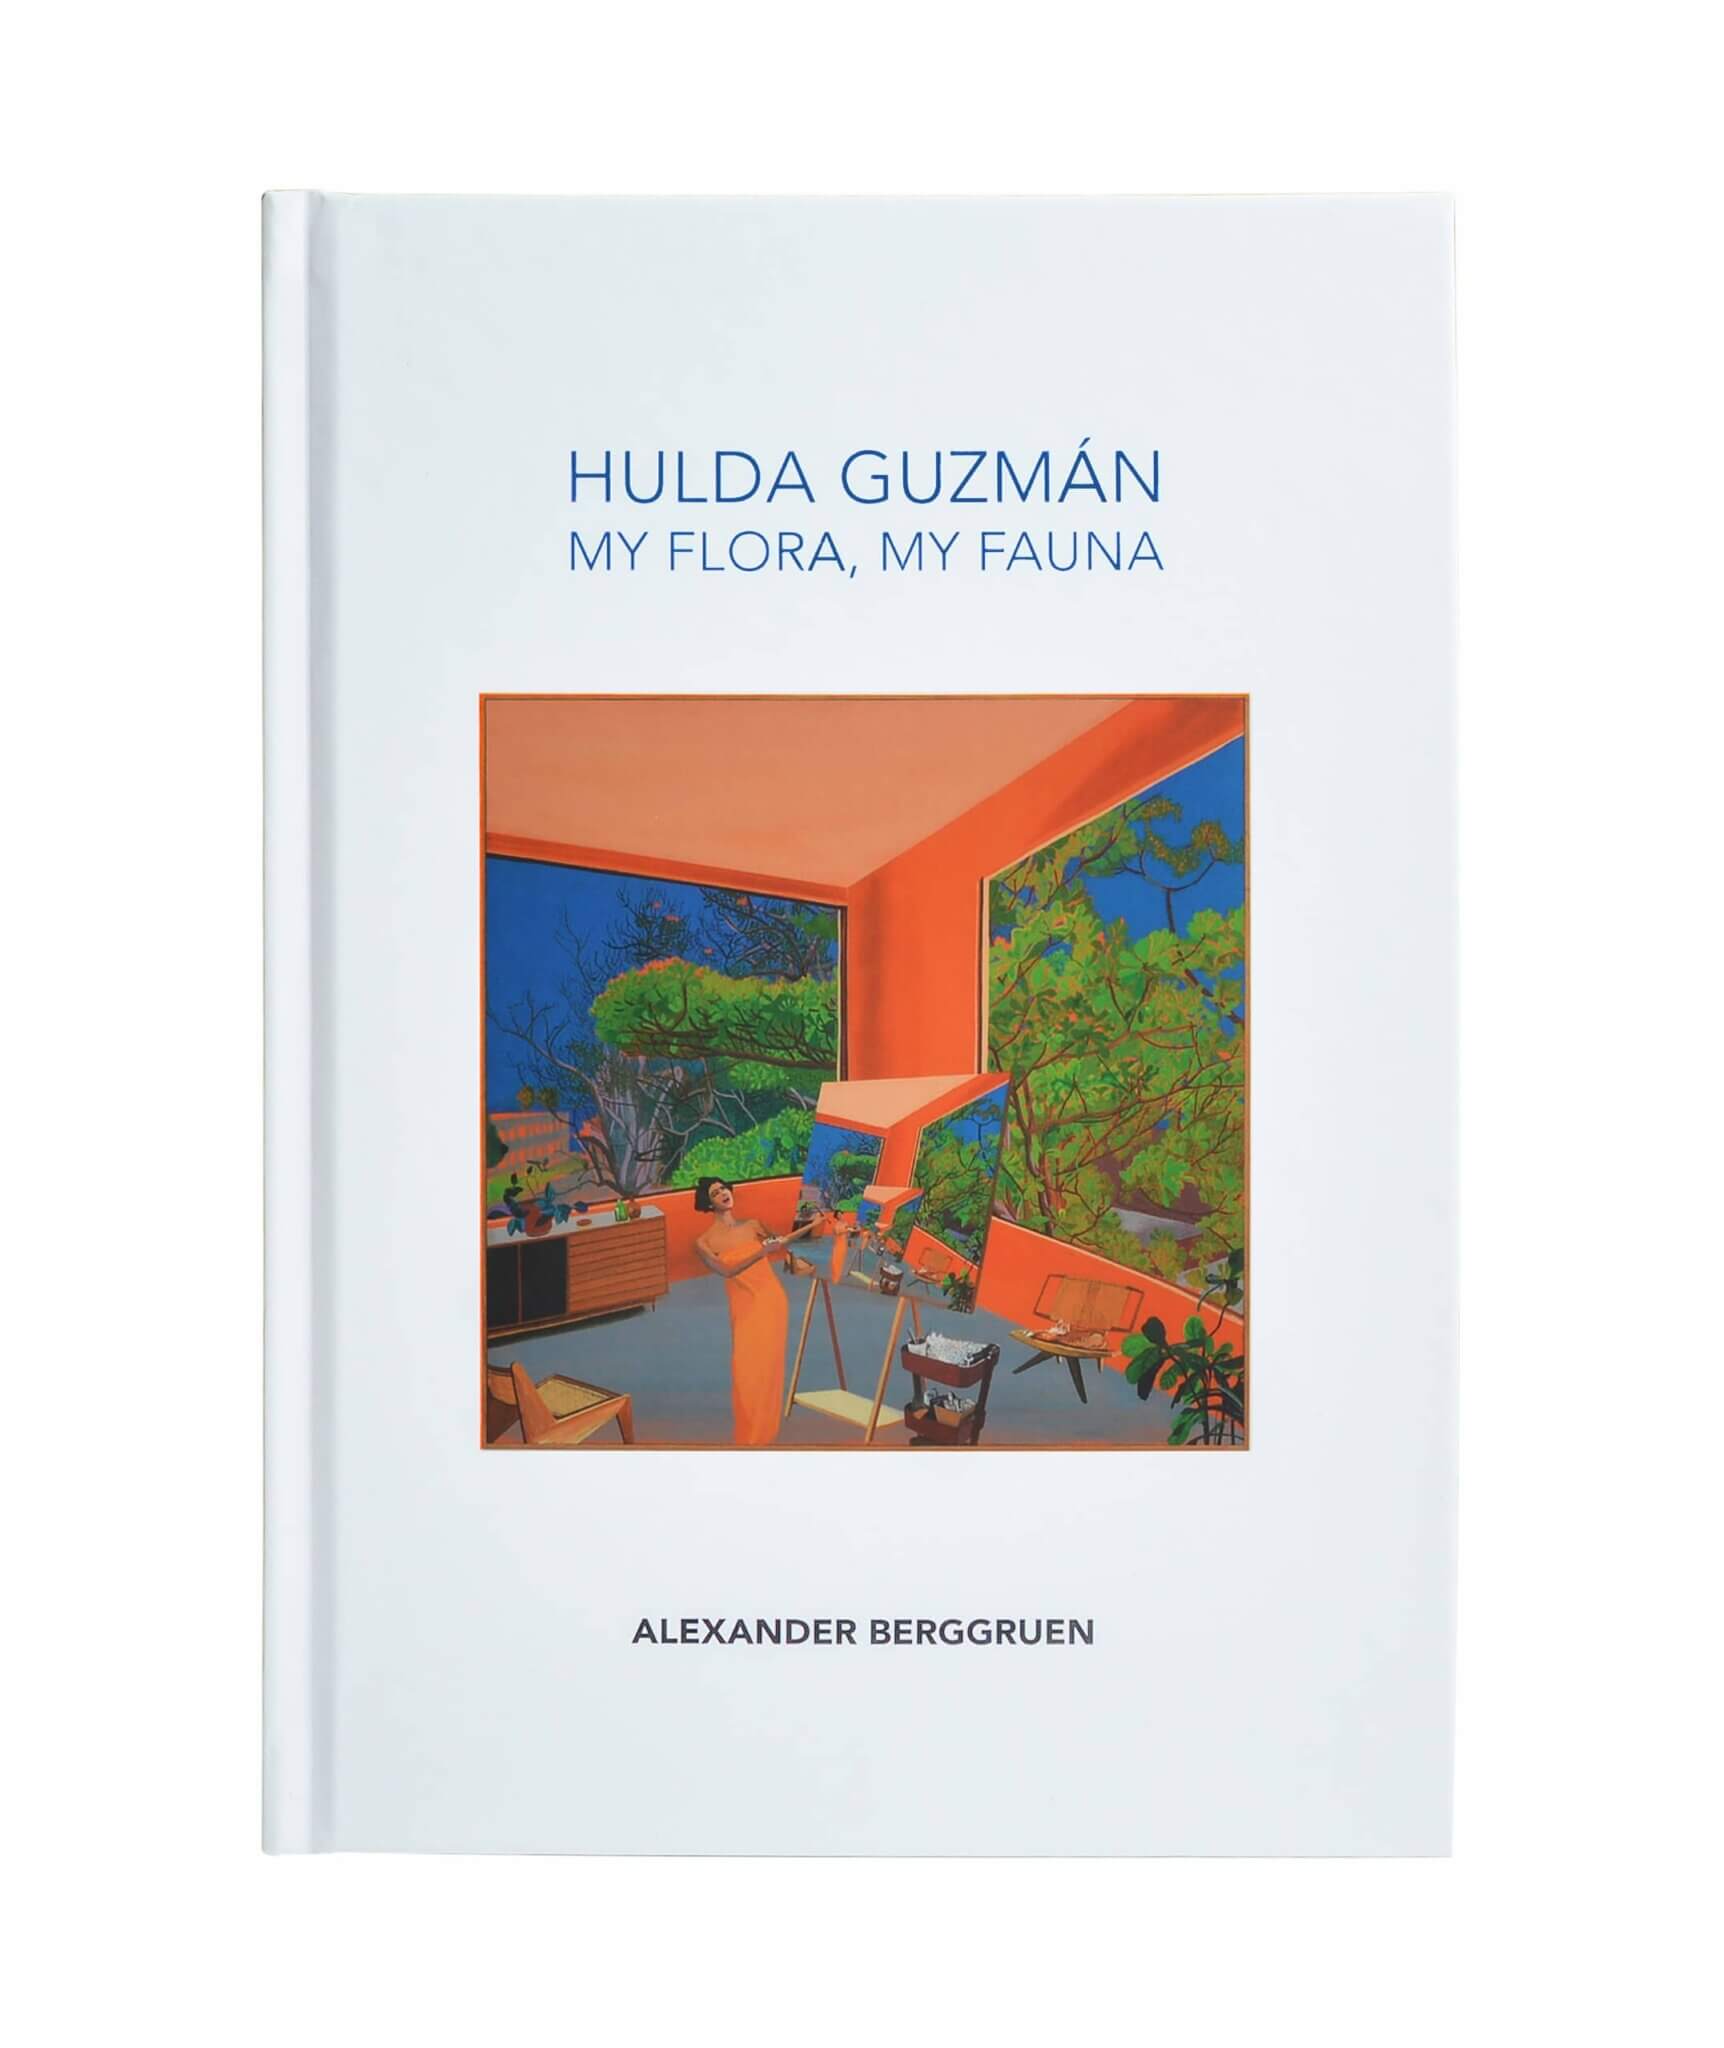 Hulda Guzmán: my flora, my fauna Exhibition Catalogue Product Photography